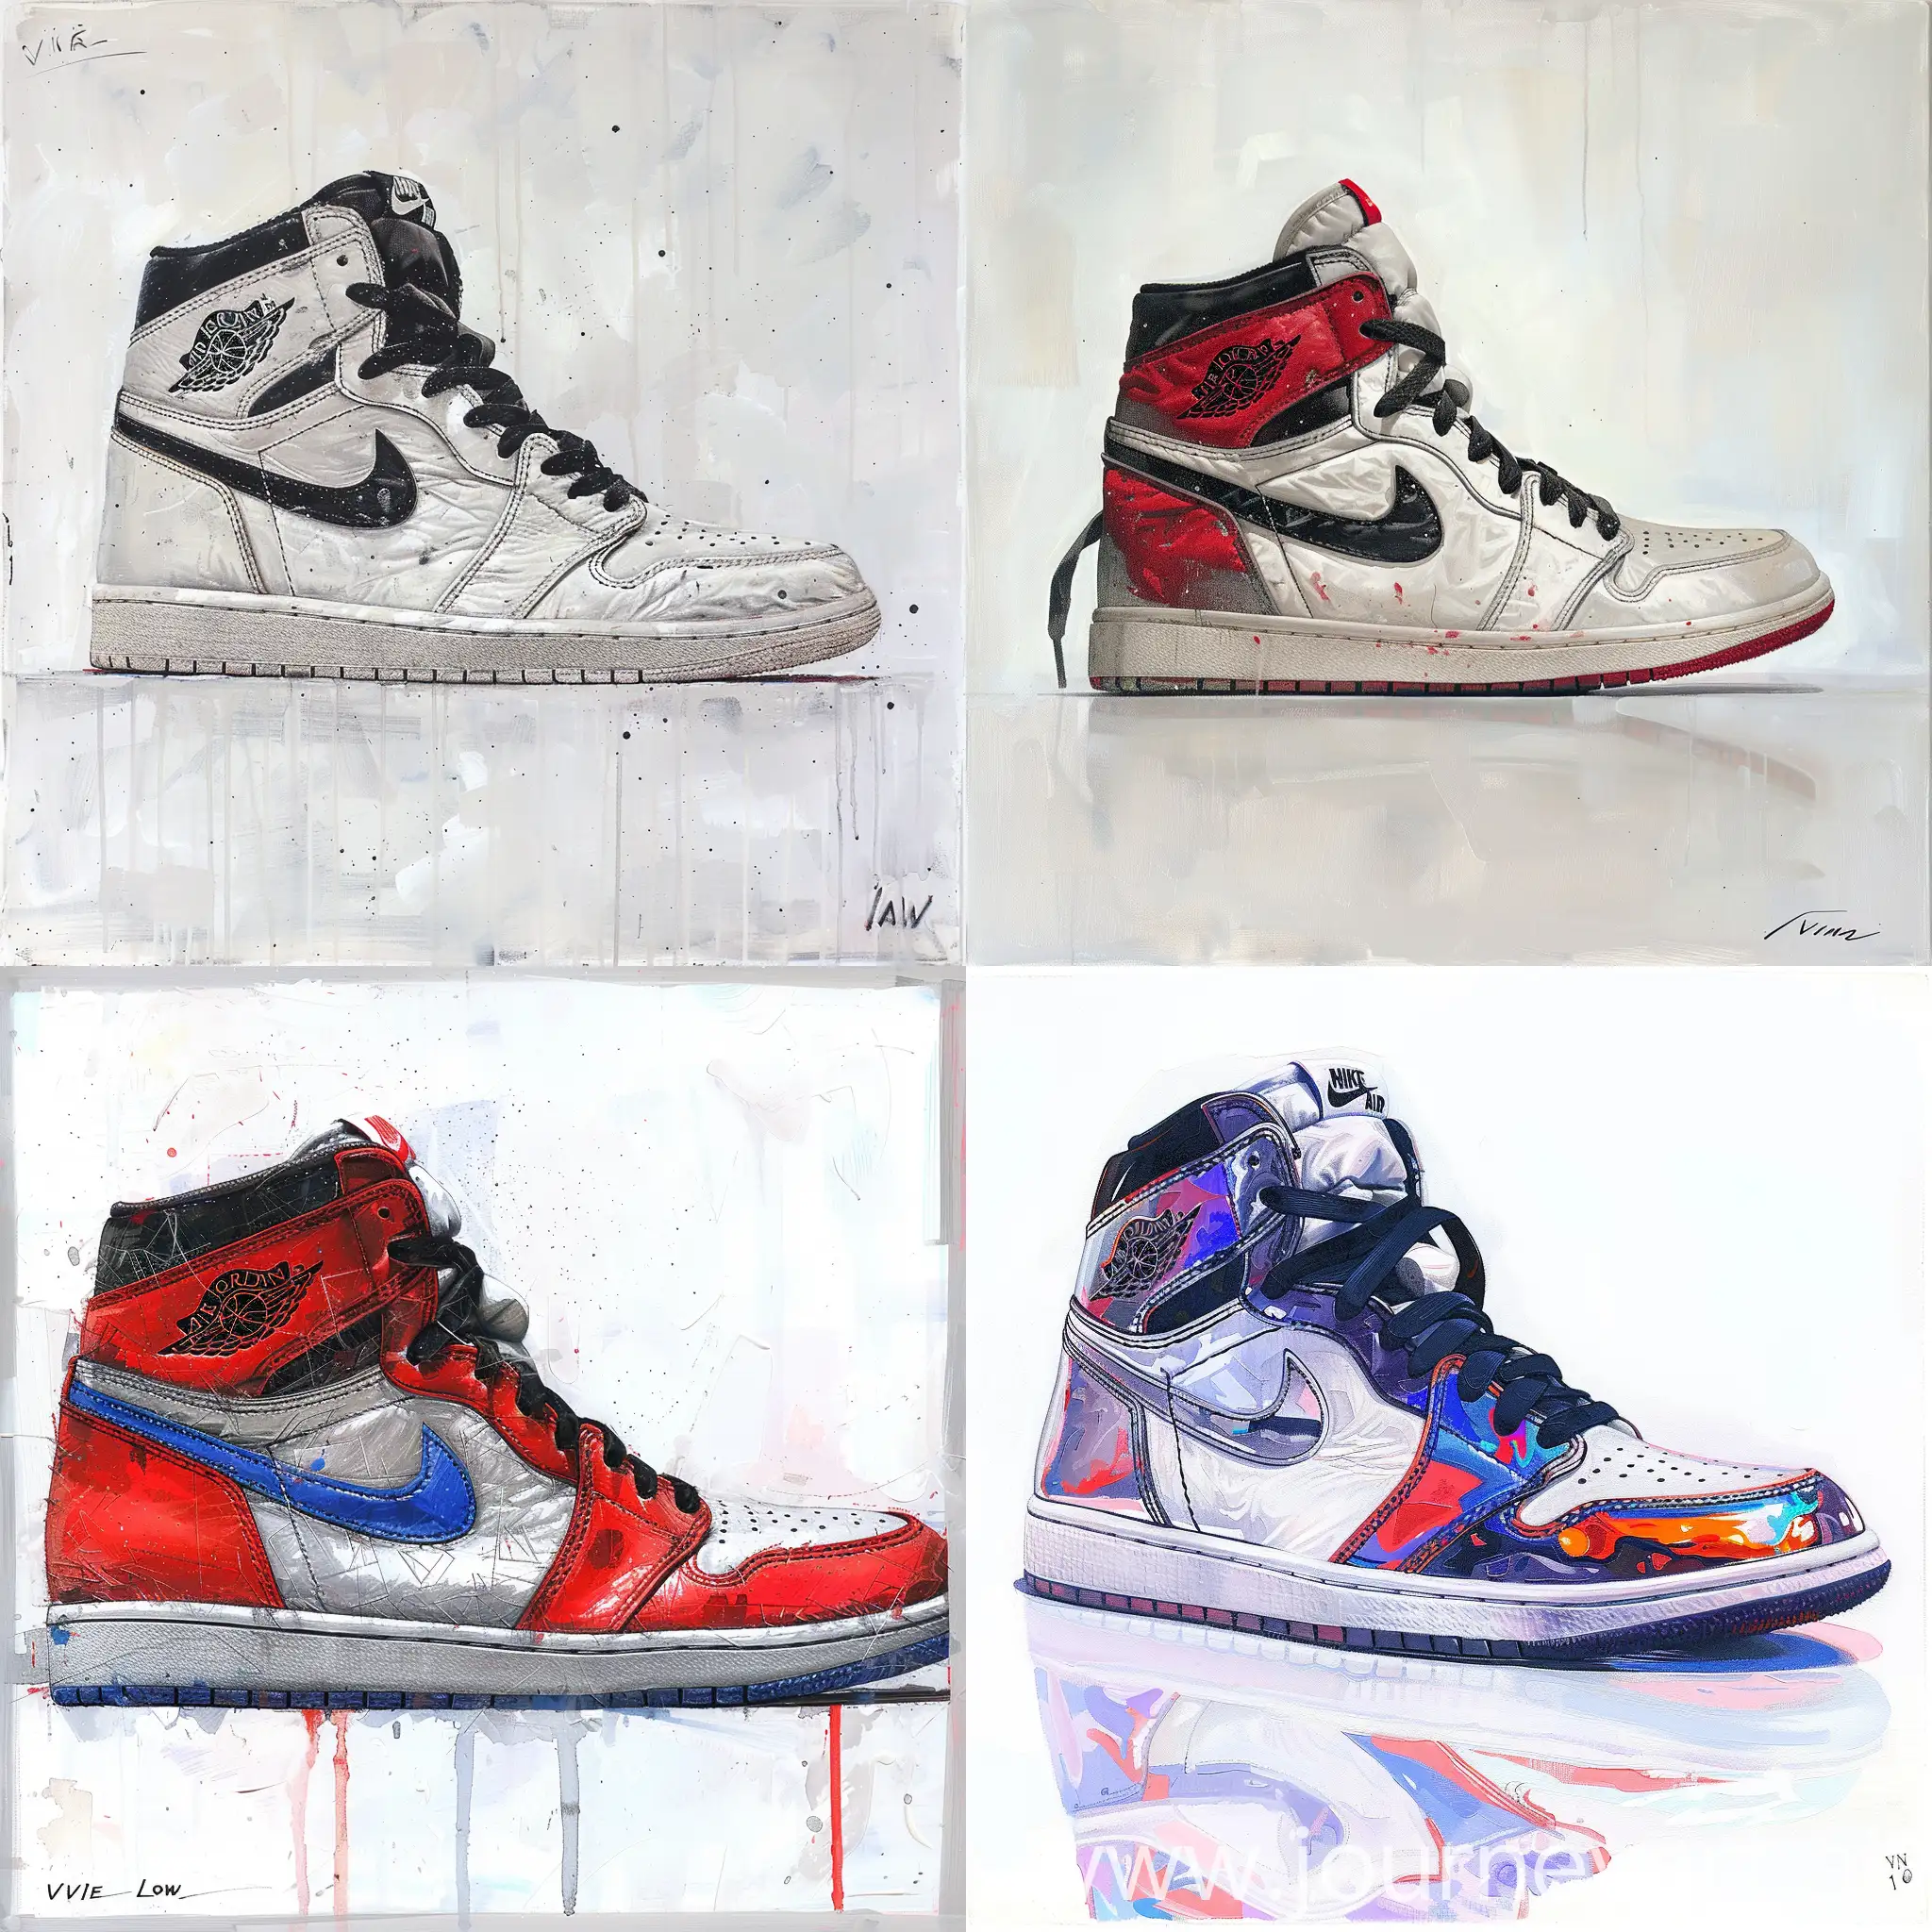 Dynamic-Sketch-of-Nike-Air-Jordan-1-on-Clean-White-Background